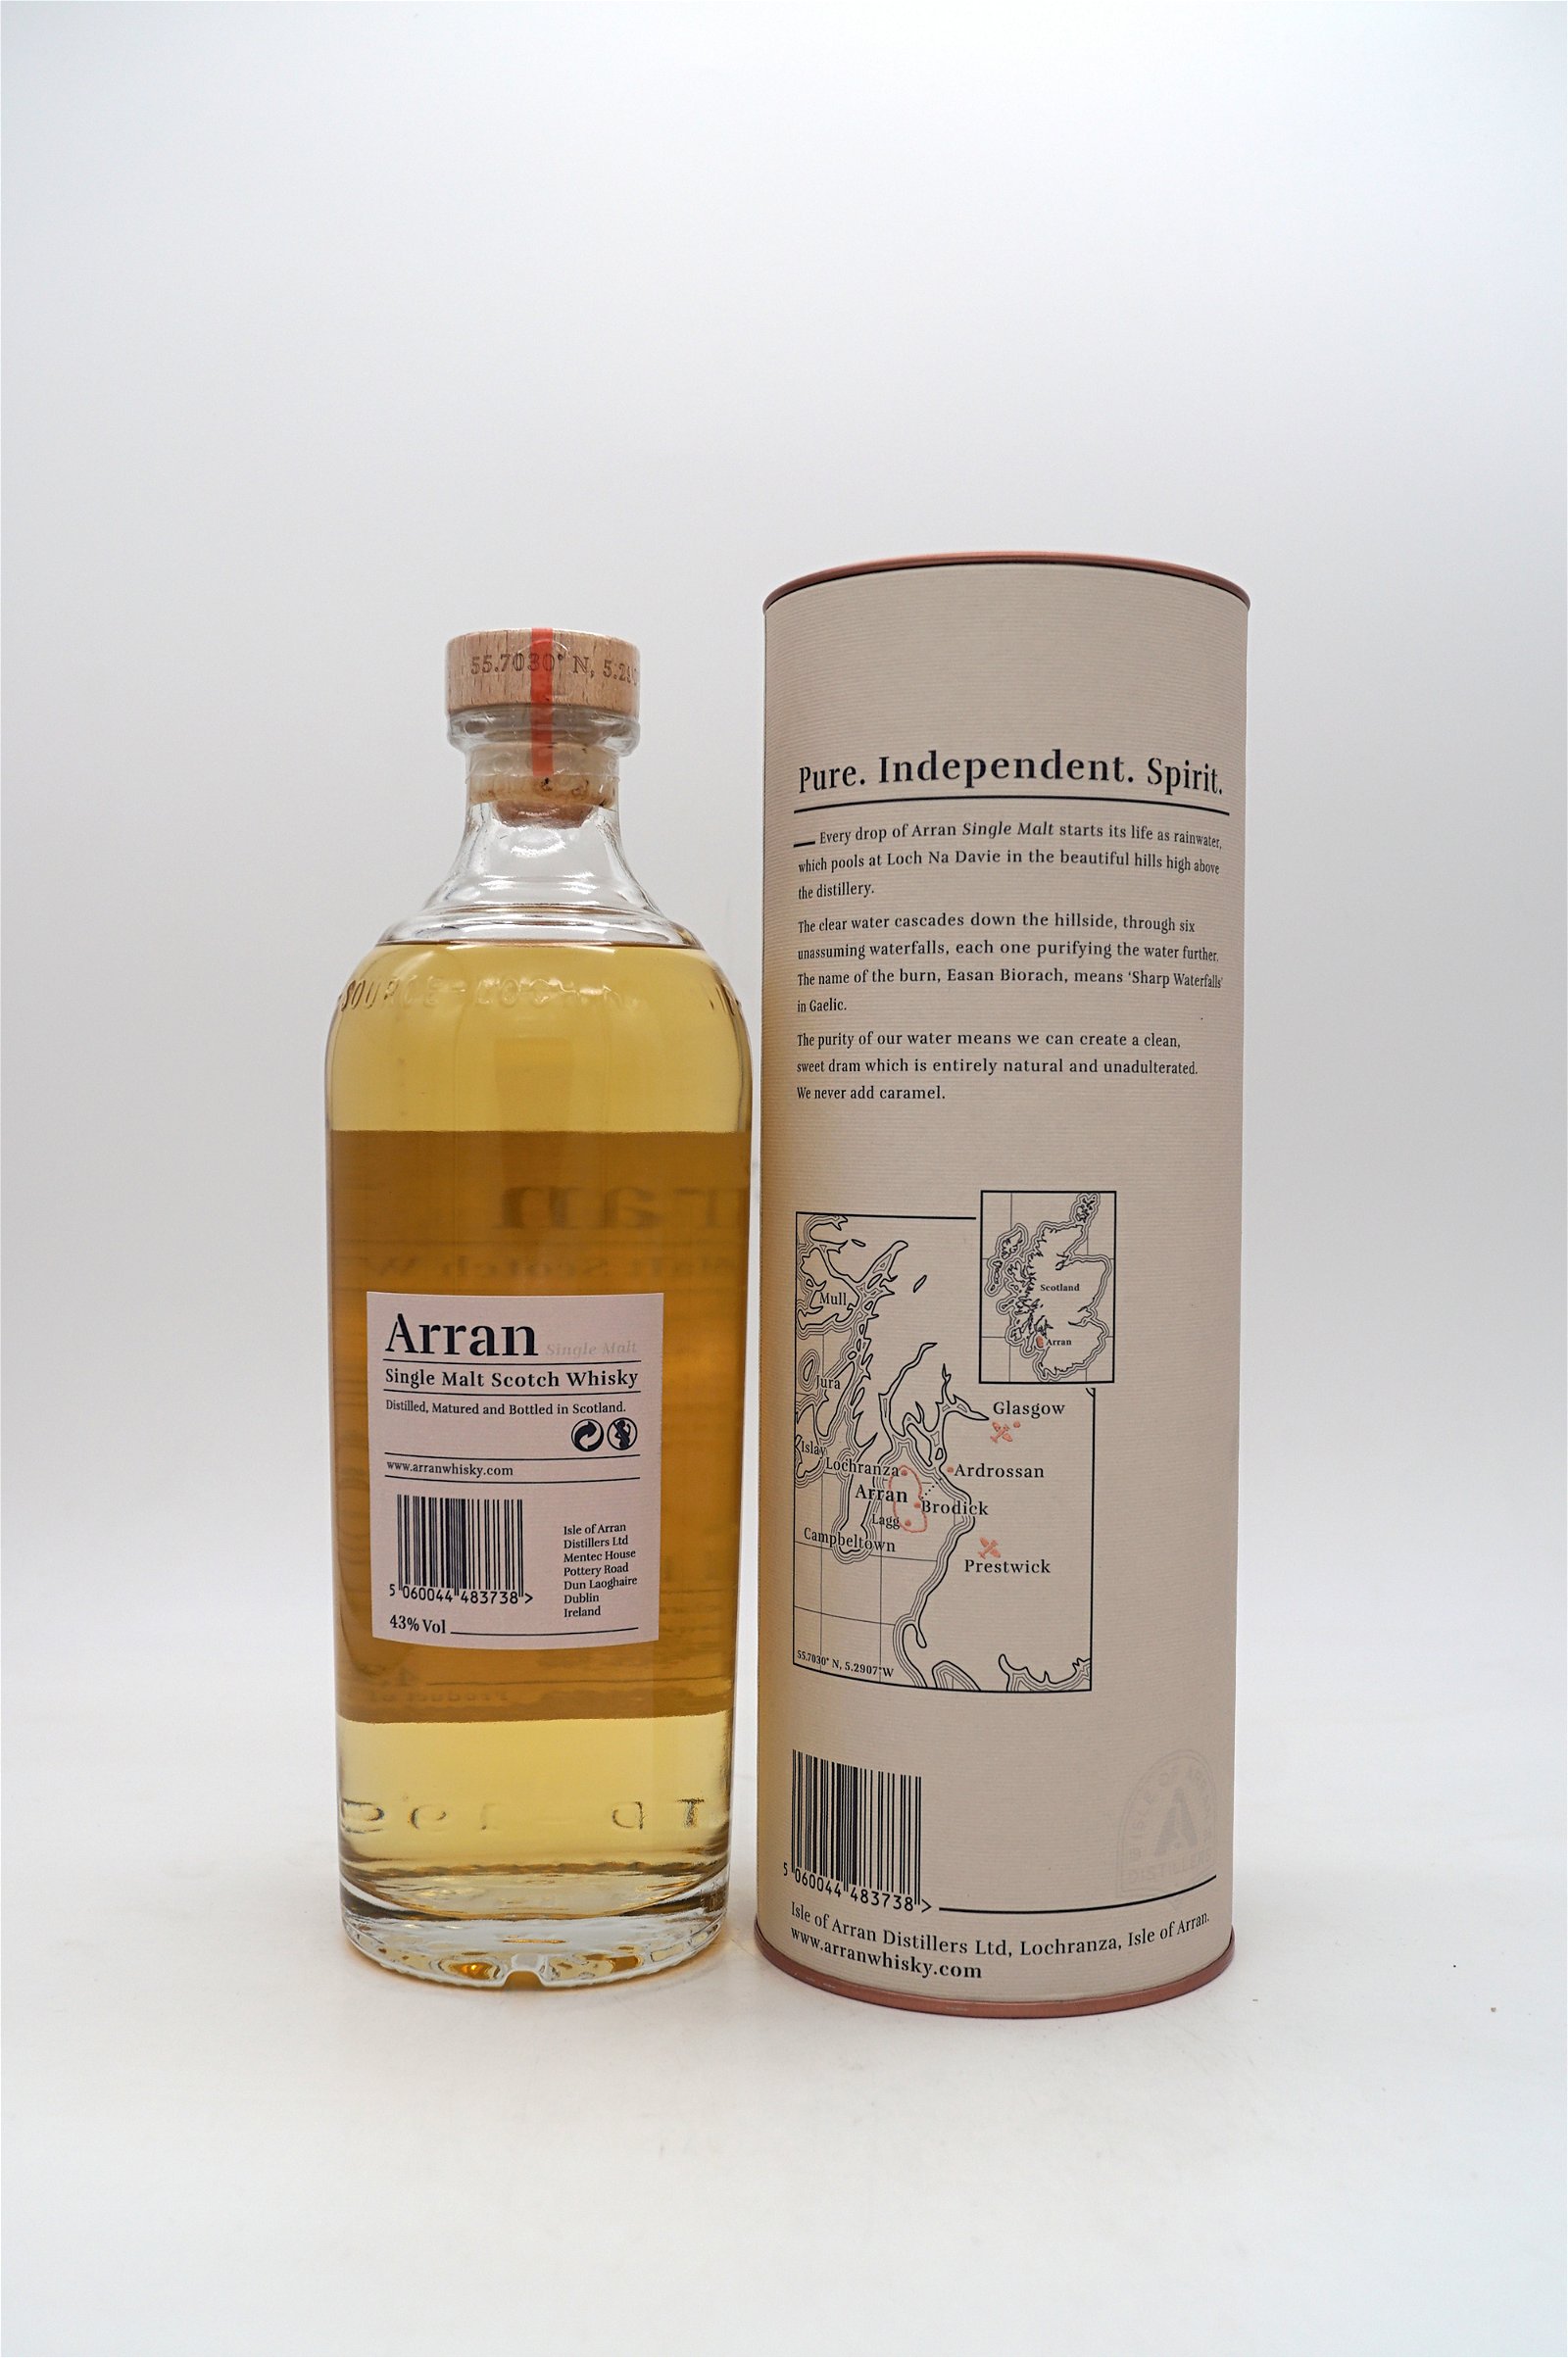 The Arran Barrel Reserve Single Malt Scotch Whisky 